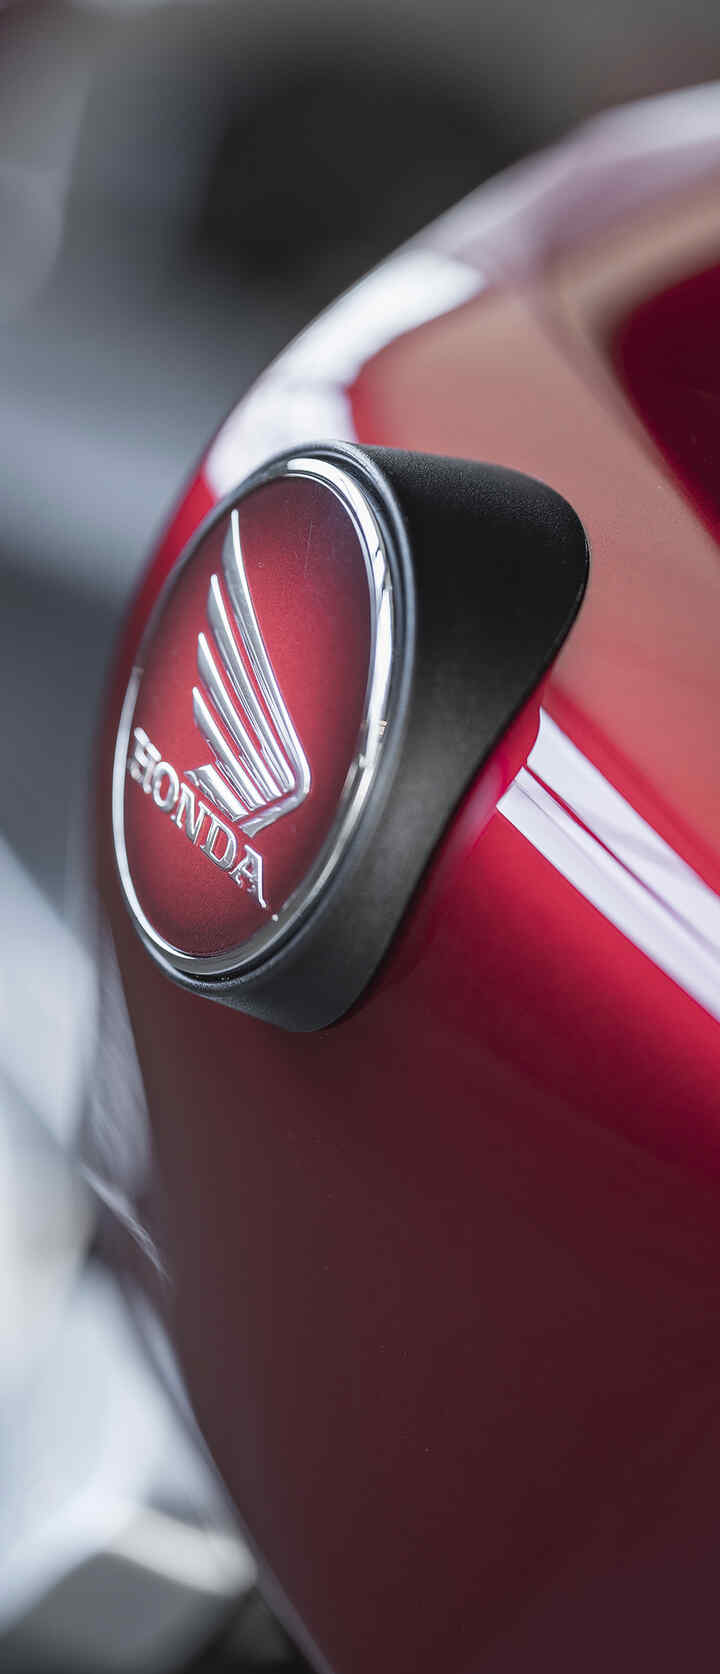 Honda motorfiets benzinetank met wings-logo